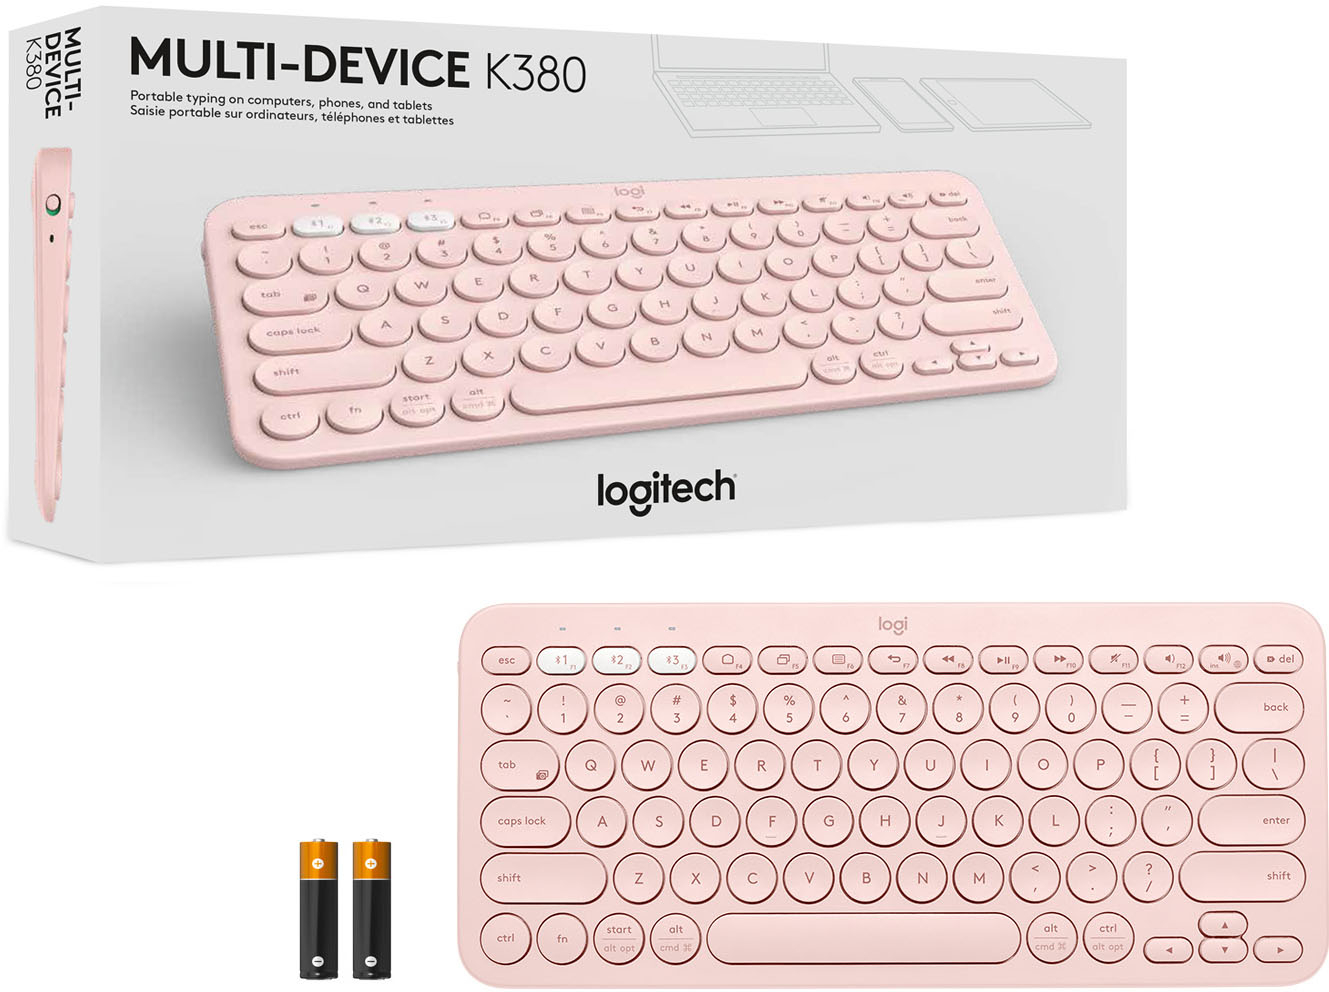 Teclado inalámbrico Logitech K380, bluetooth, multidispositivo, usa pilas,  layout español, rosado - Coolbox